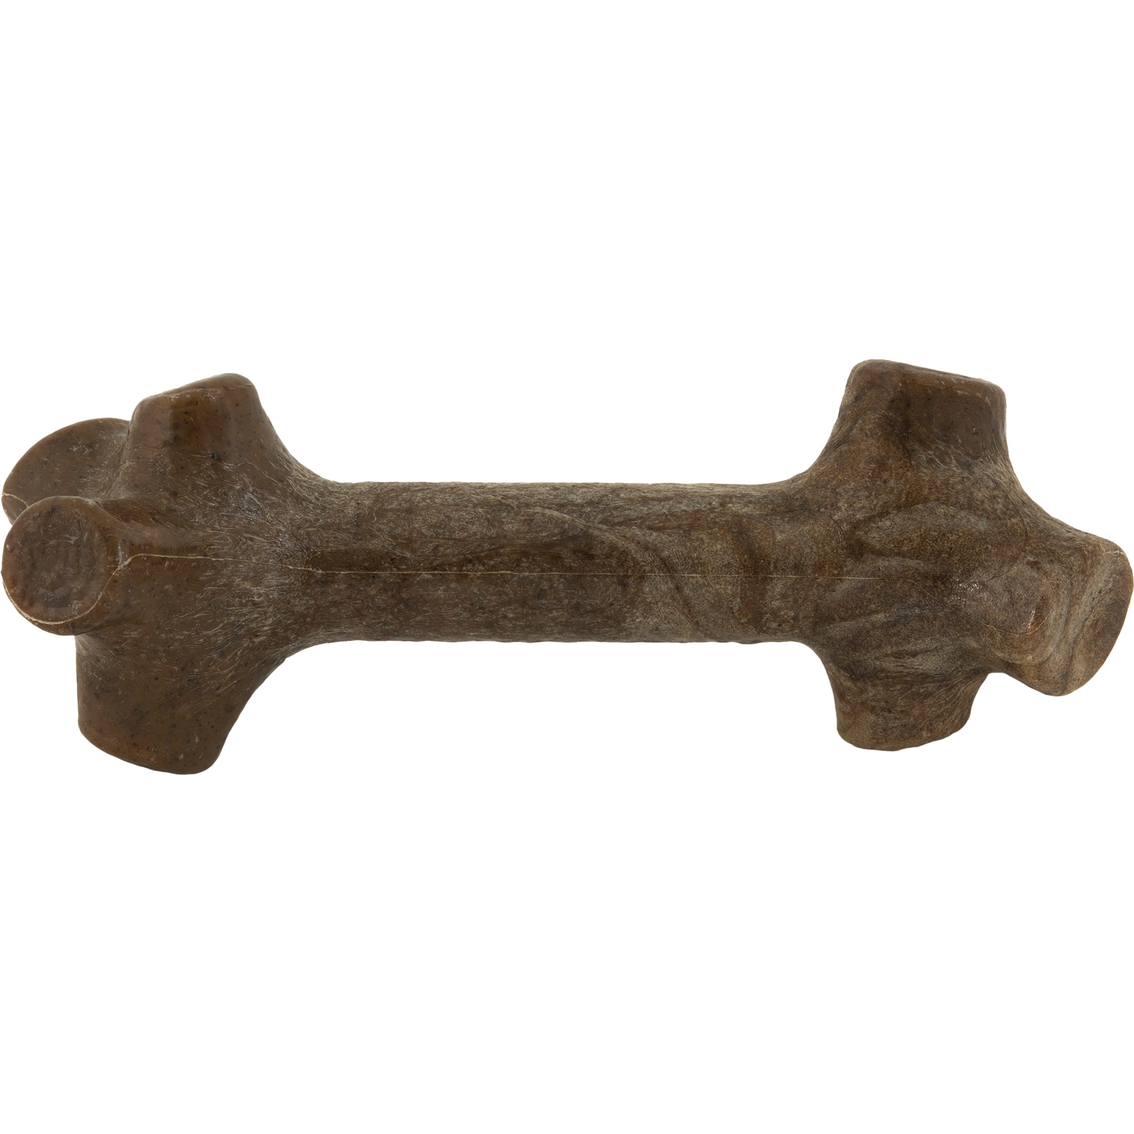 Petmate Pet Qwerks Peanut Butter Stick BarkBone Nylon Dog Chew Toy - Image 2 of 3